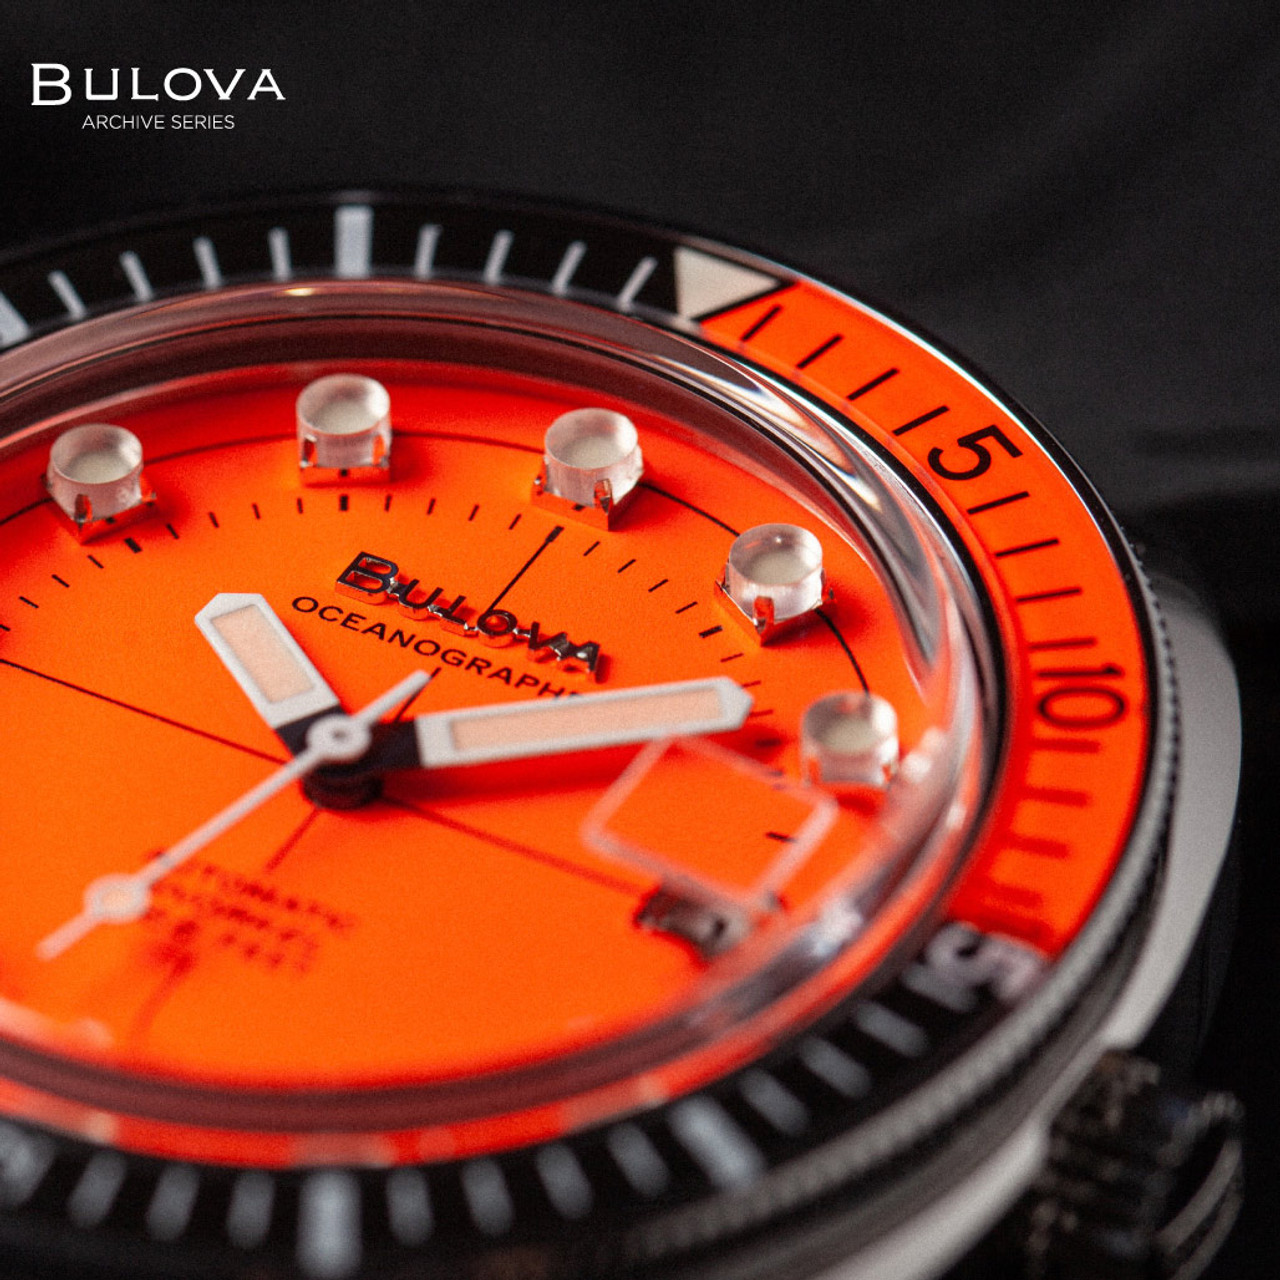 Bulova Oceanographer Dial Dive Watch Snorkel Orange Automatic #96B350 with